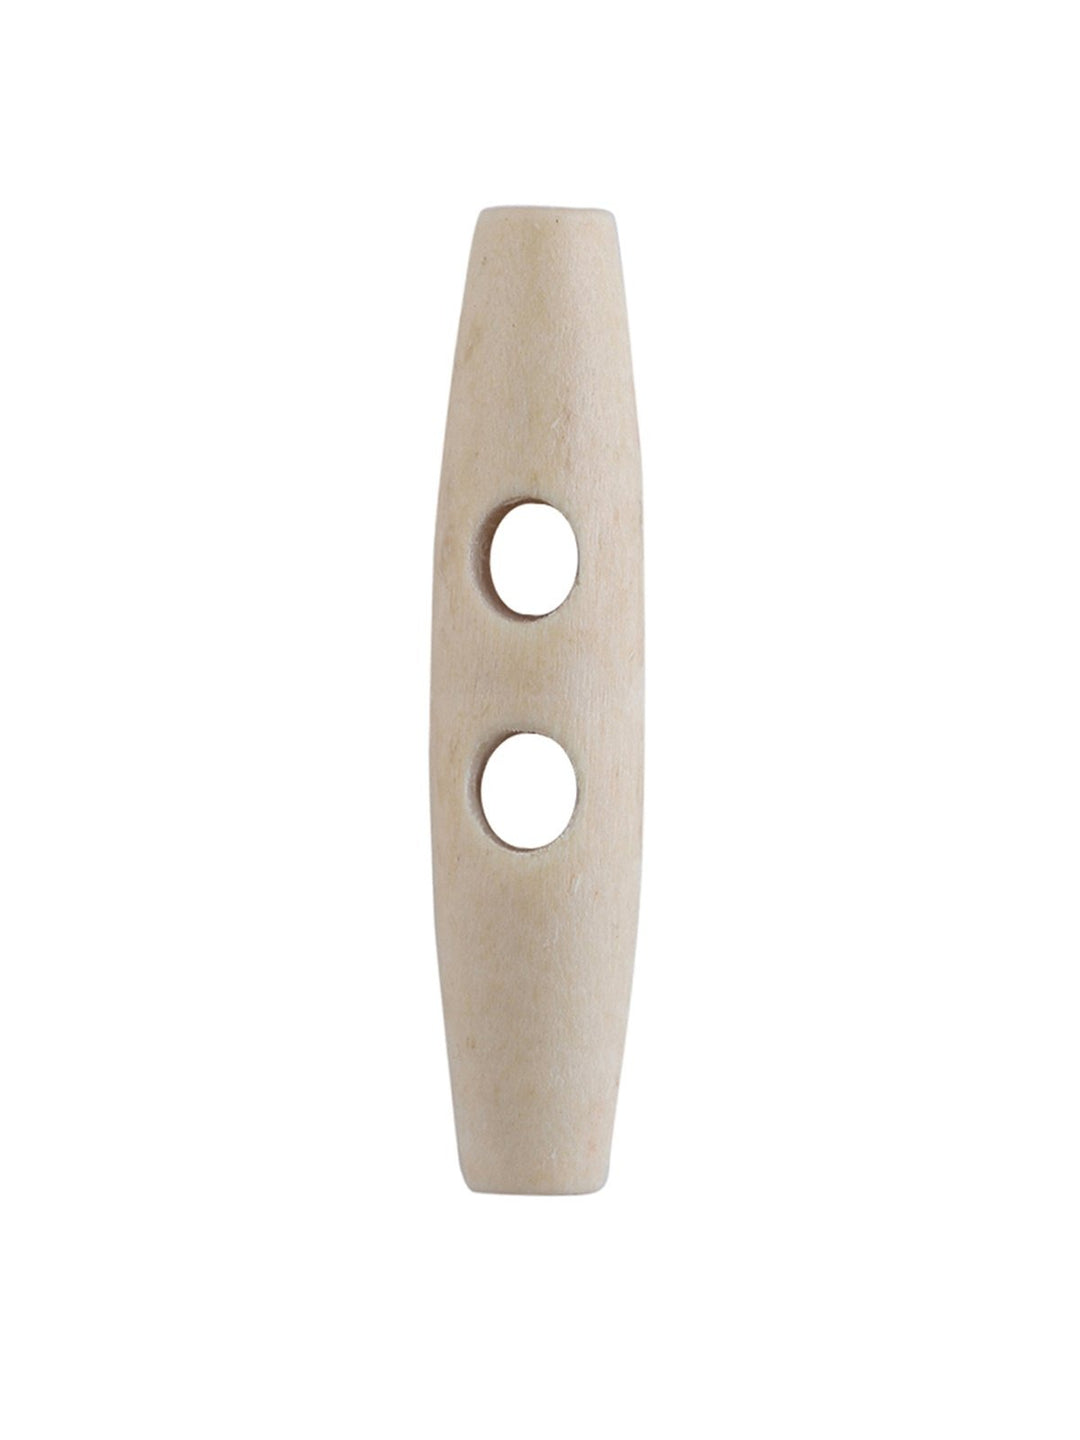 Fashion 2-Hole Oval Shape Wooden Toggle Cream Color Button